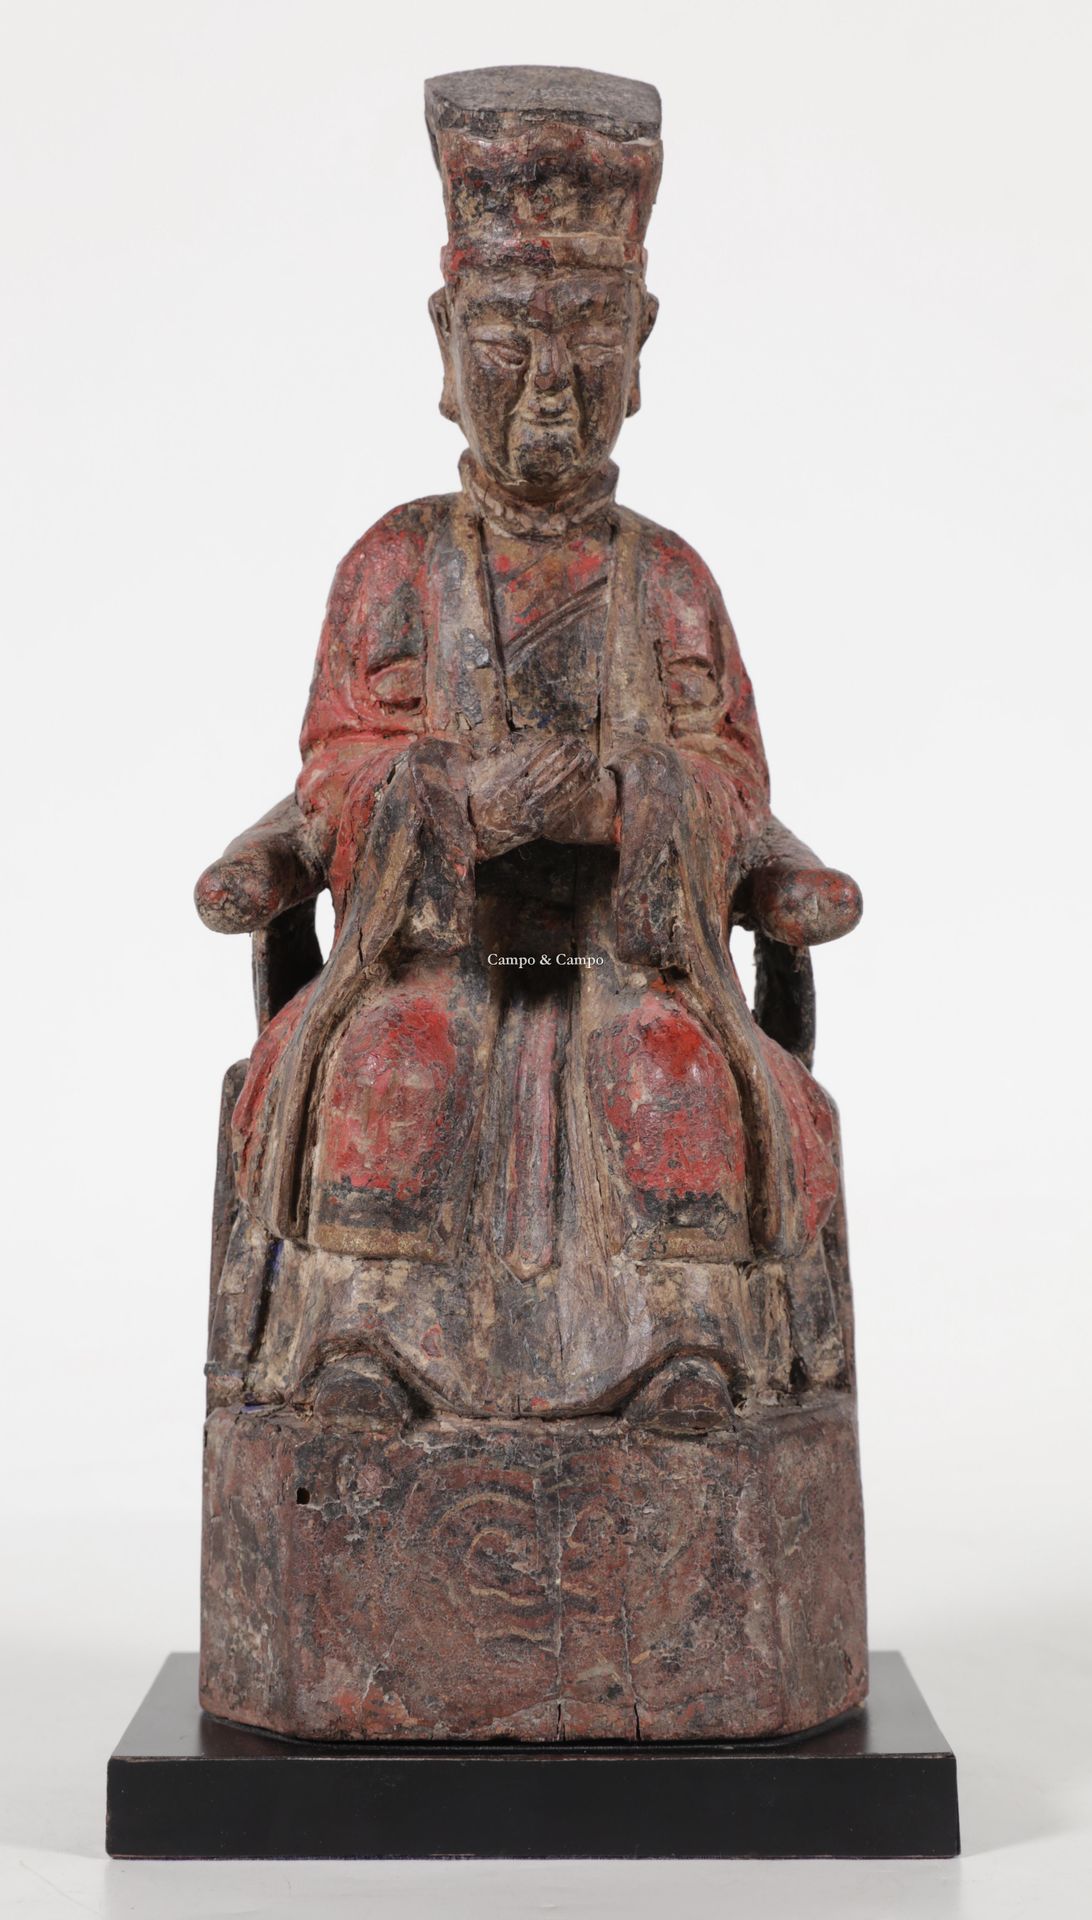 VARIA 1644-1912 Seated God, in polychrome wood
Zittende God van polychroom besch&hellip;